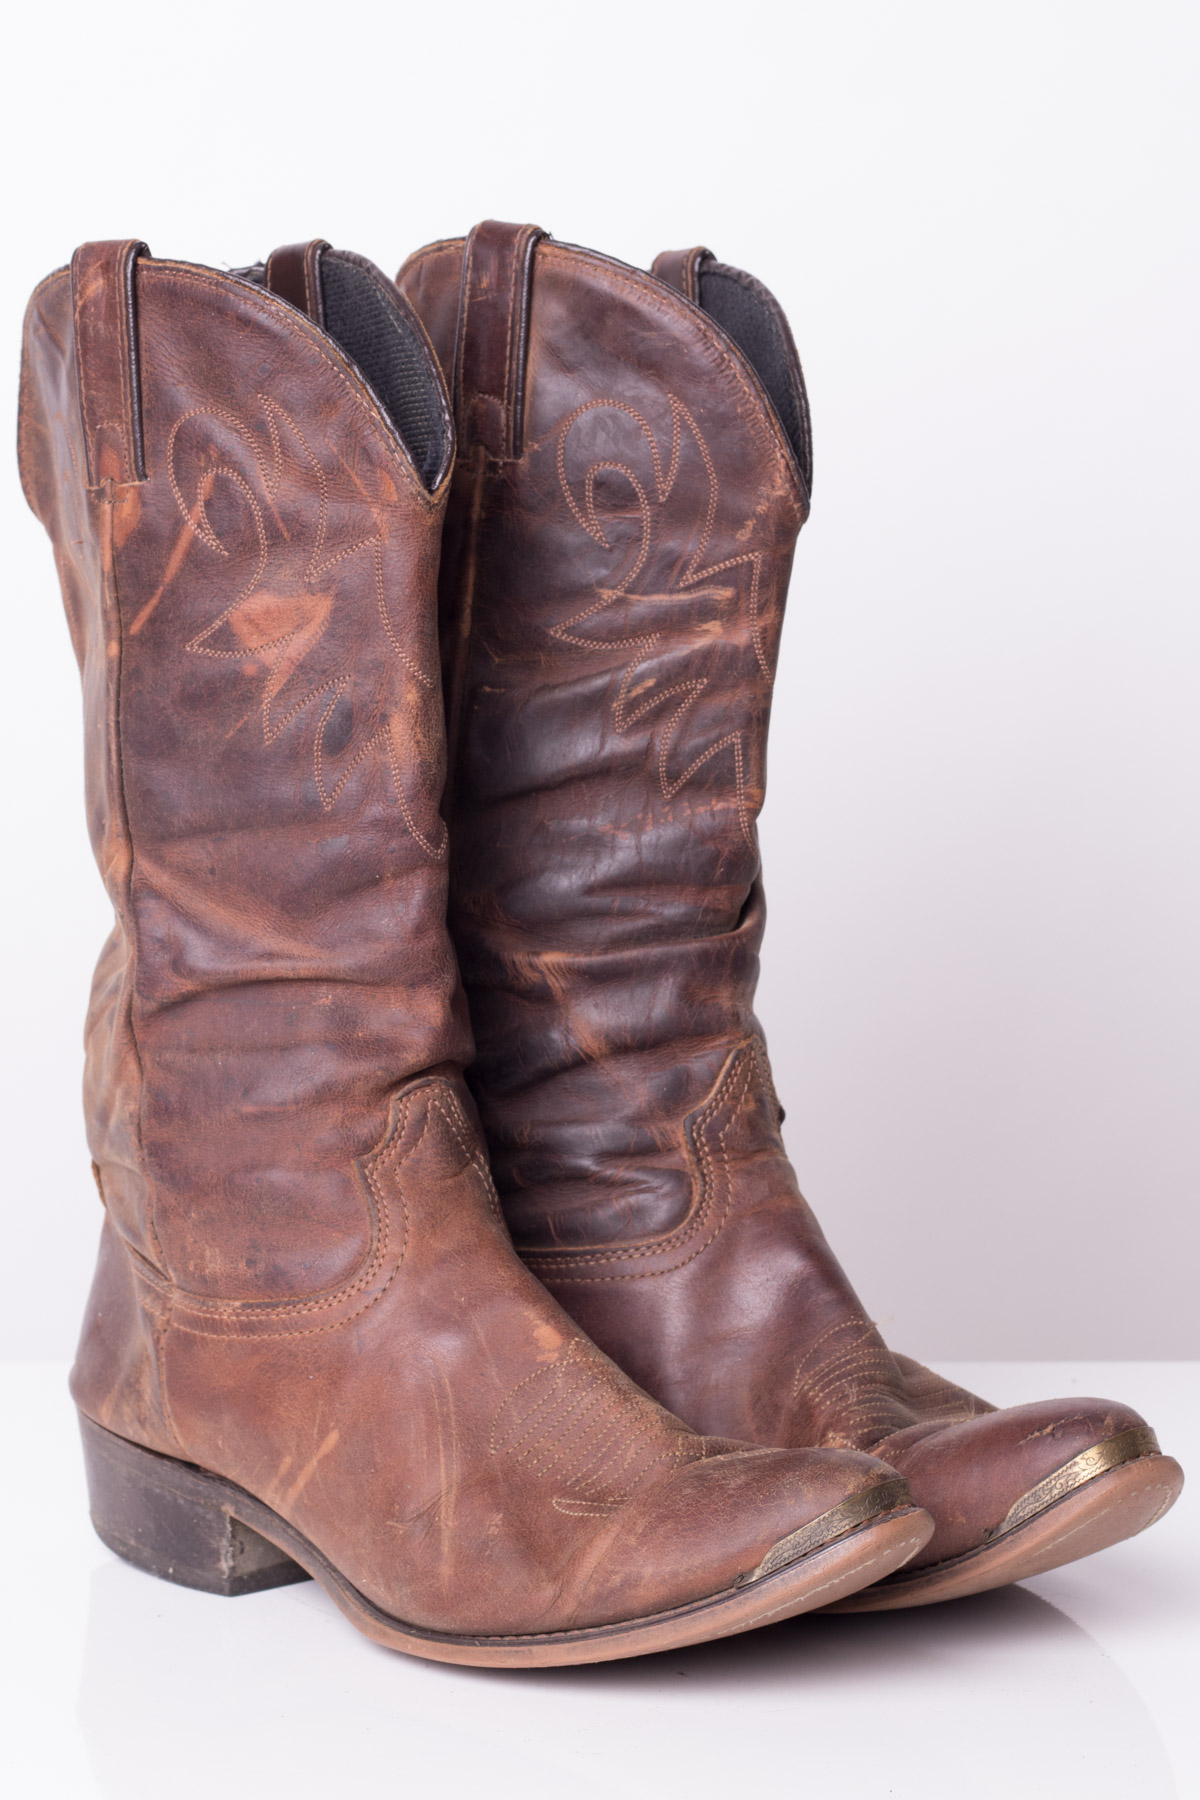 Vintage Durango Cowboy Boots (11D) - Ragstock